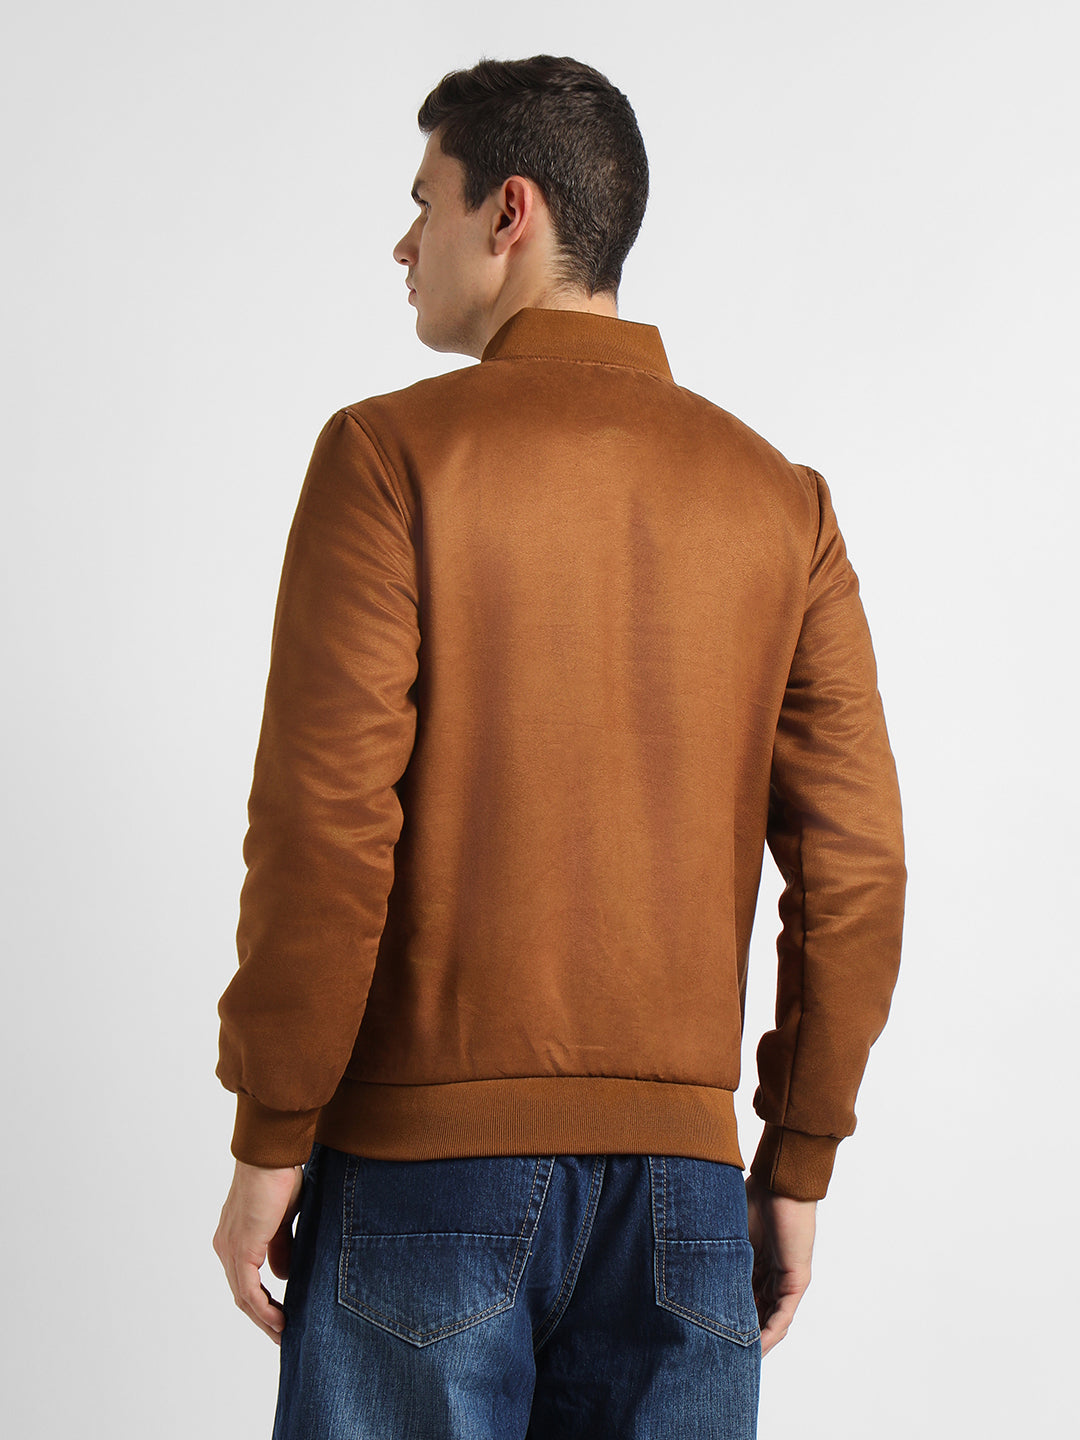 Dennis Lingo Men's Tan Solid Rib Collar Full Sleeve Light weight jacket Jackets